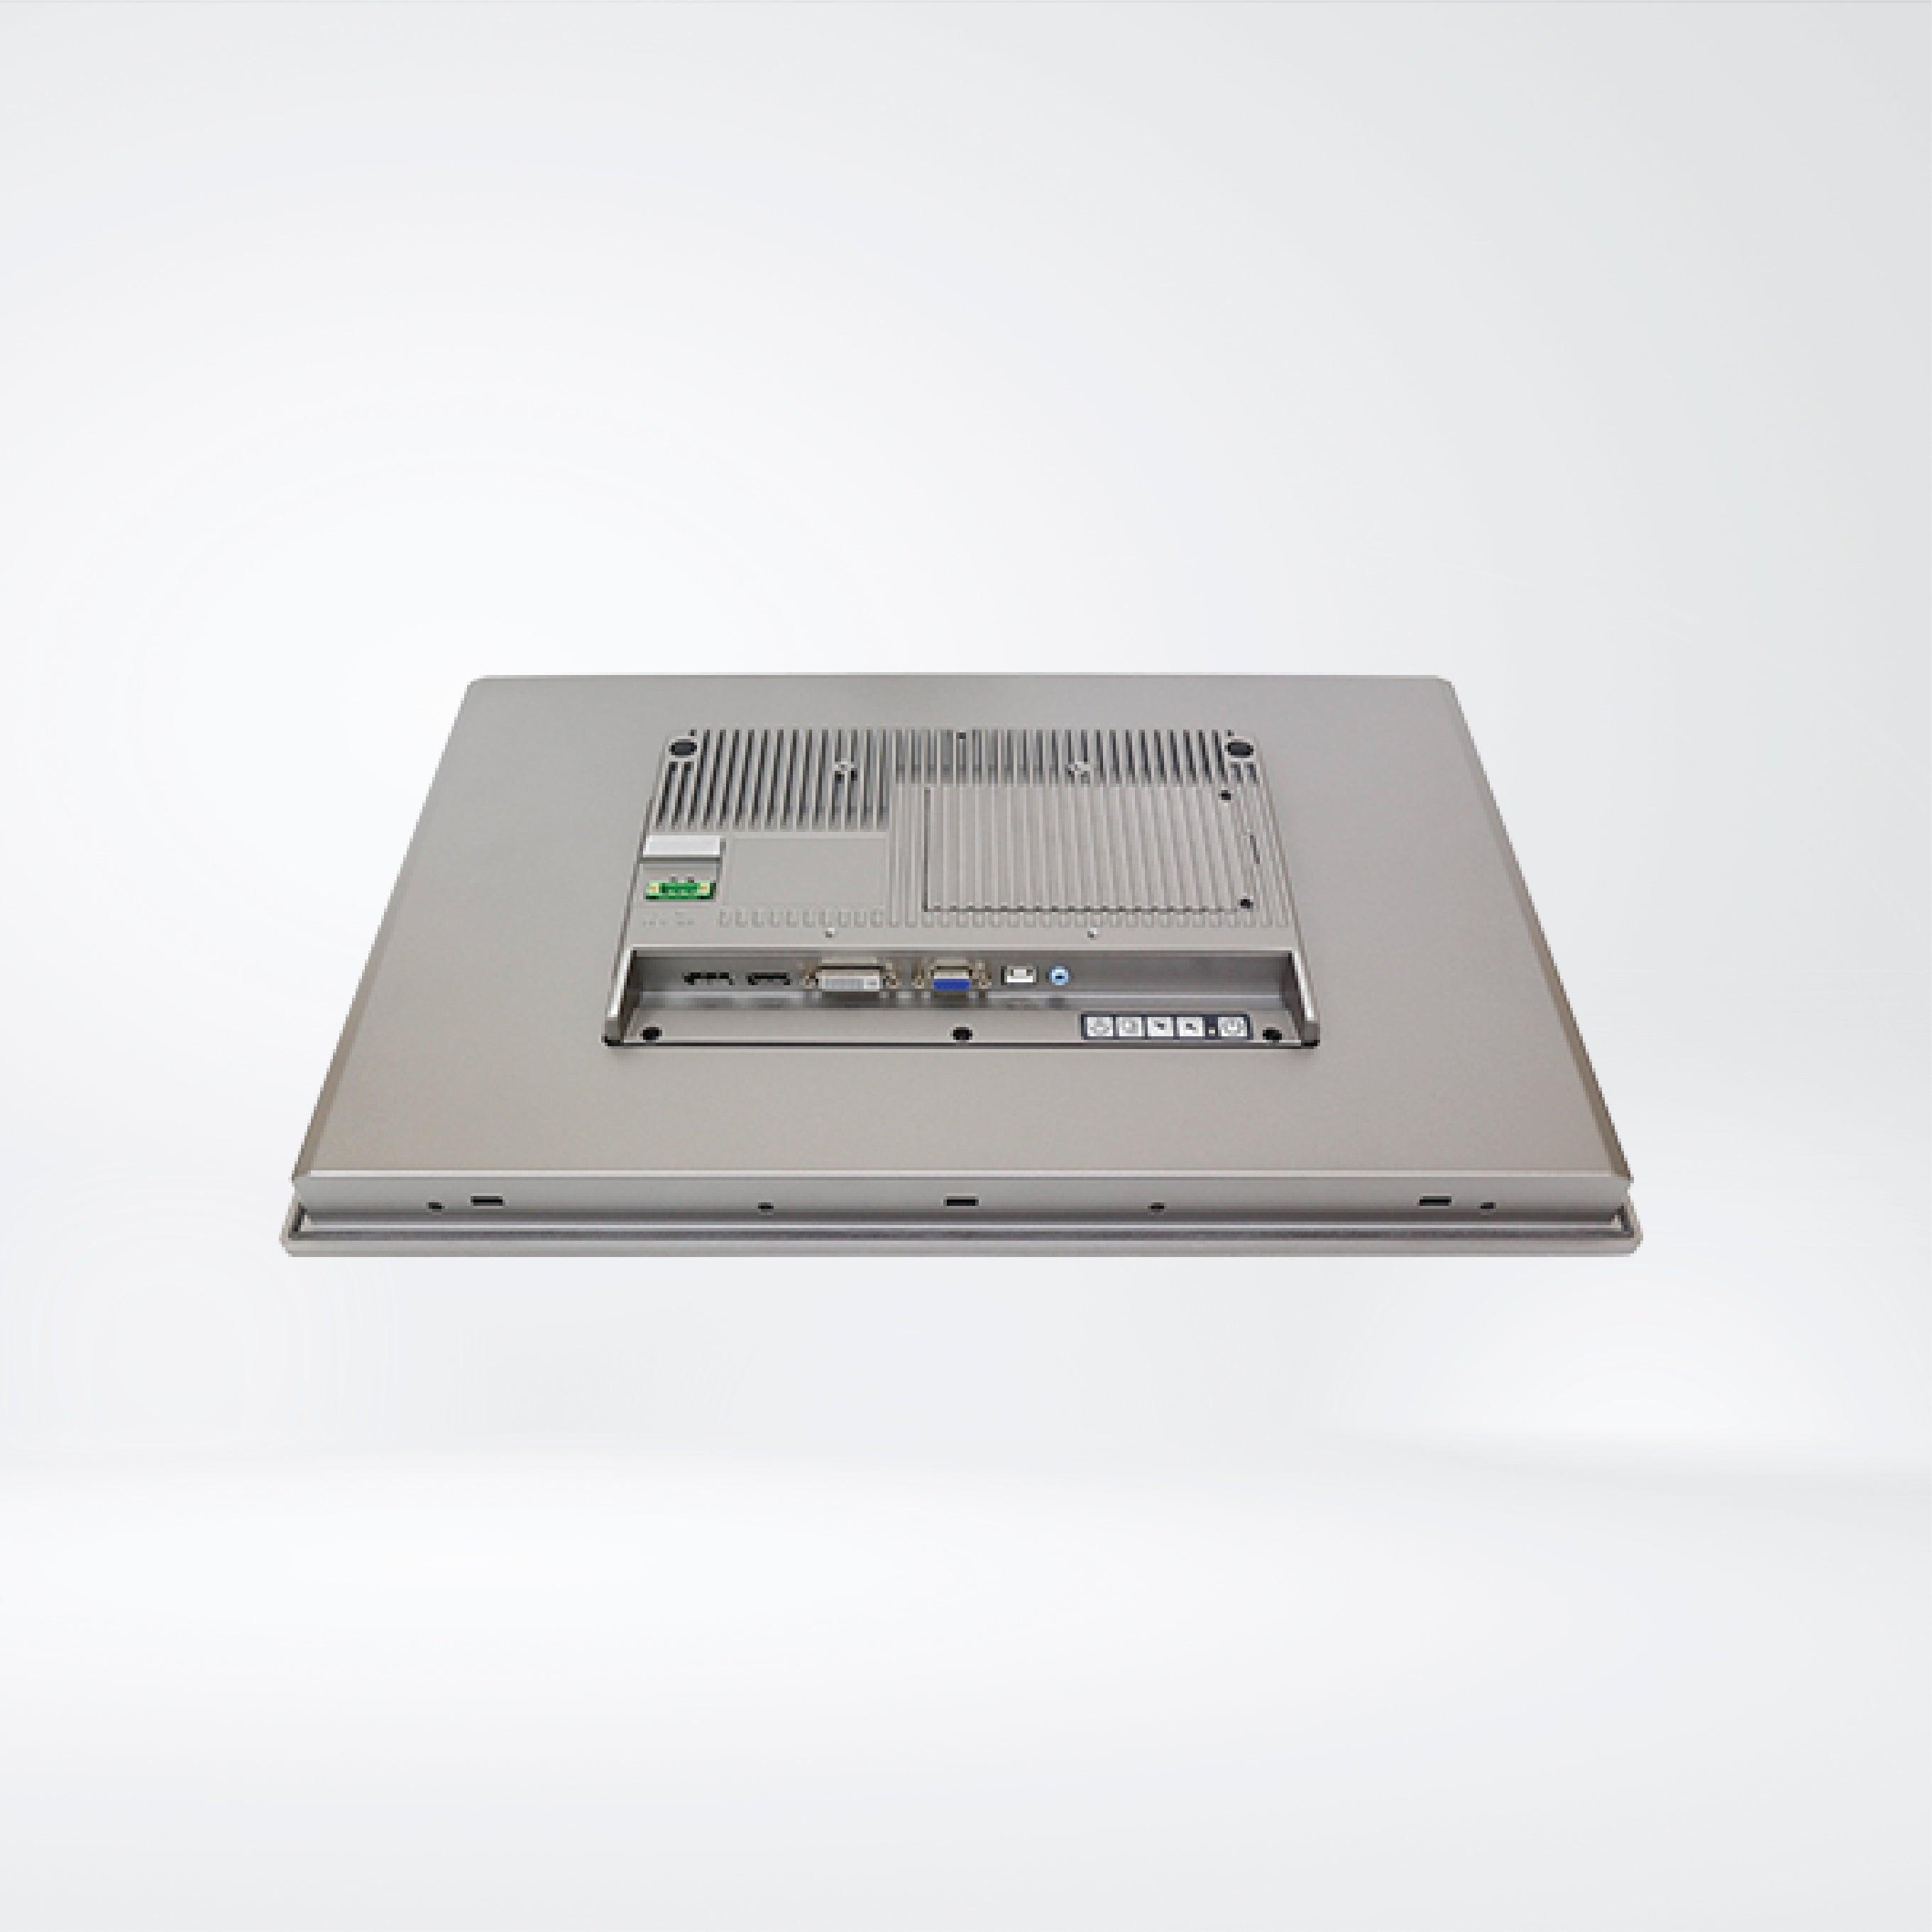 ARCDIS-118APRG(H) 18.5” Front Panel IP66 Aluminum Die-casting Display - Riverplus